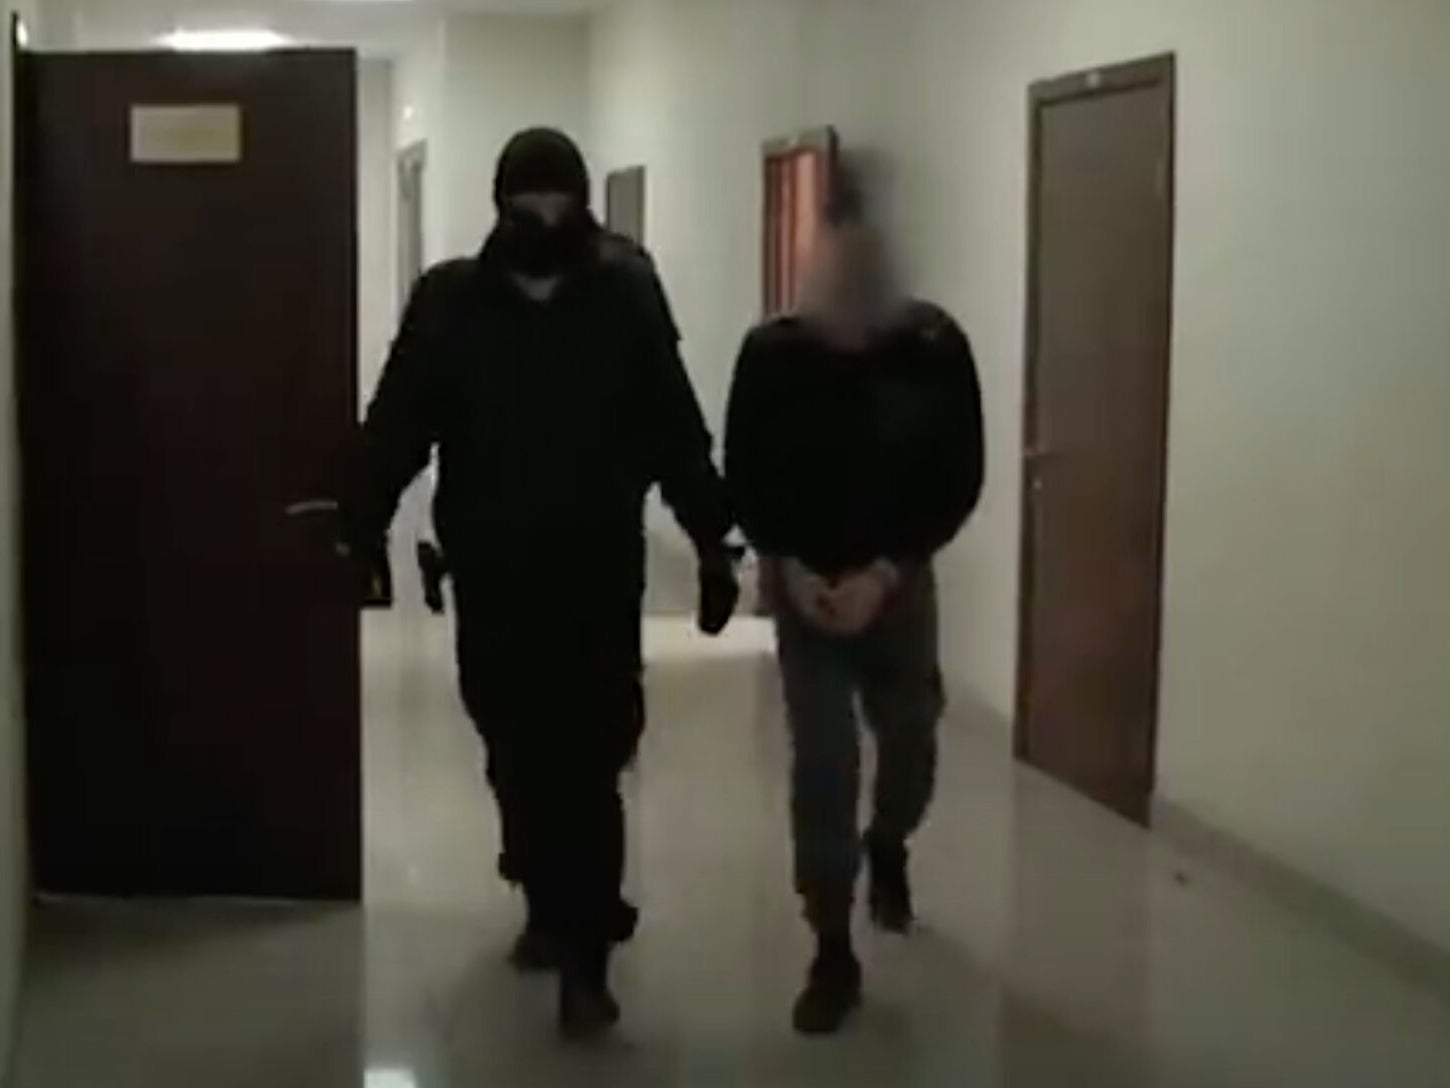 Radik Tagirov, who was arrested on suspicion of killing 26 elderly women, is pictured in custody in Russia.